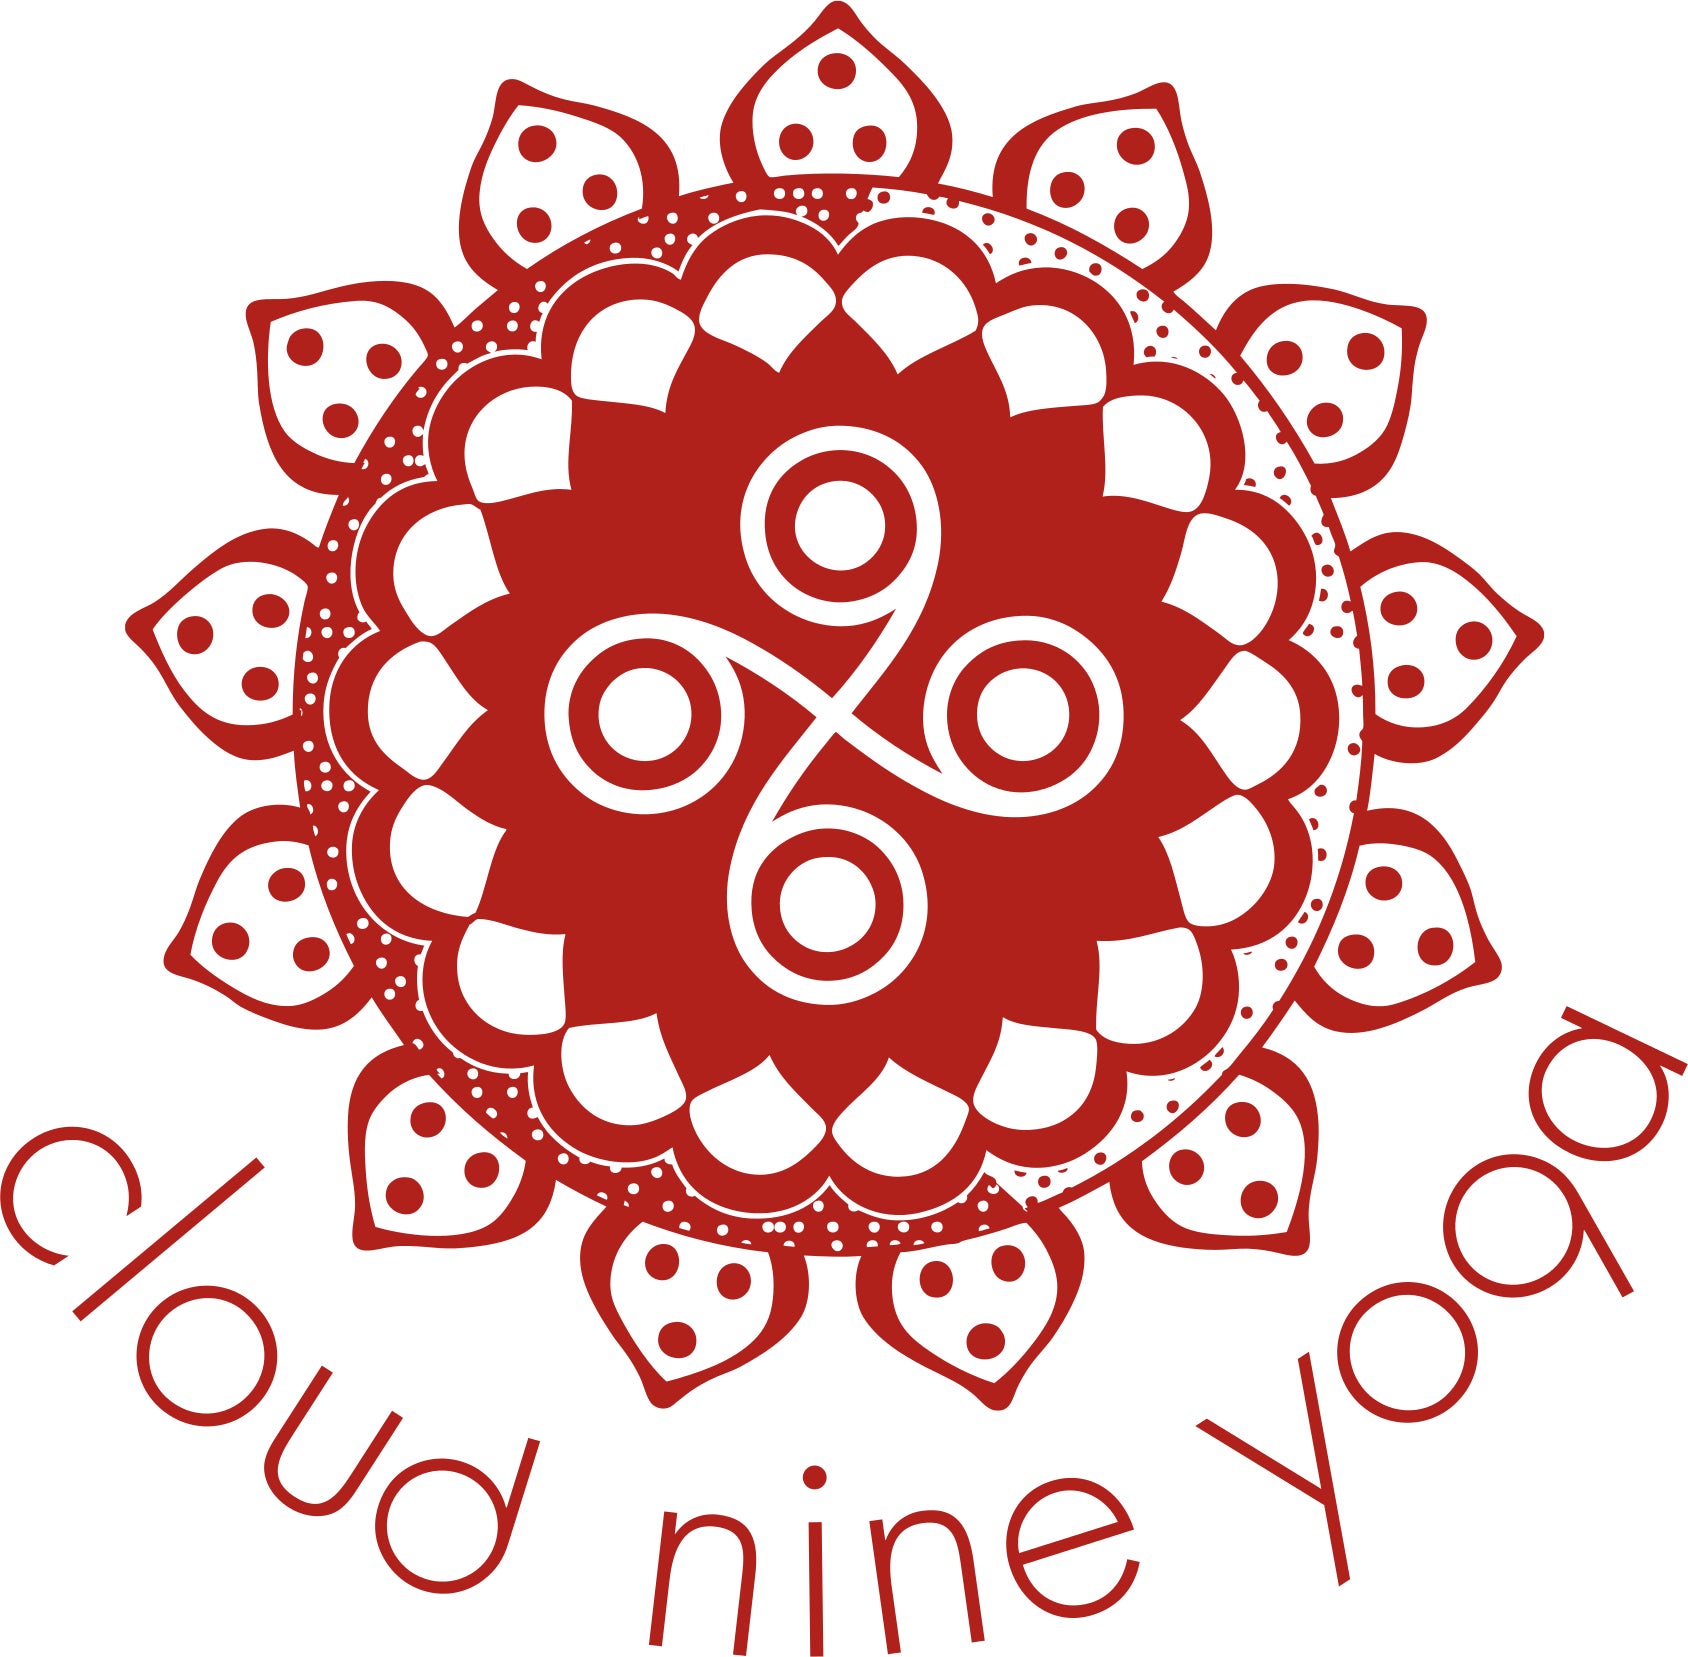 Cloud Nine Yoga